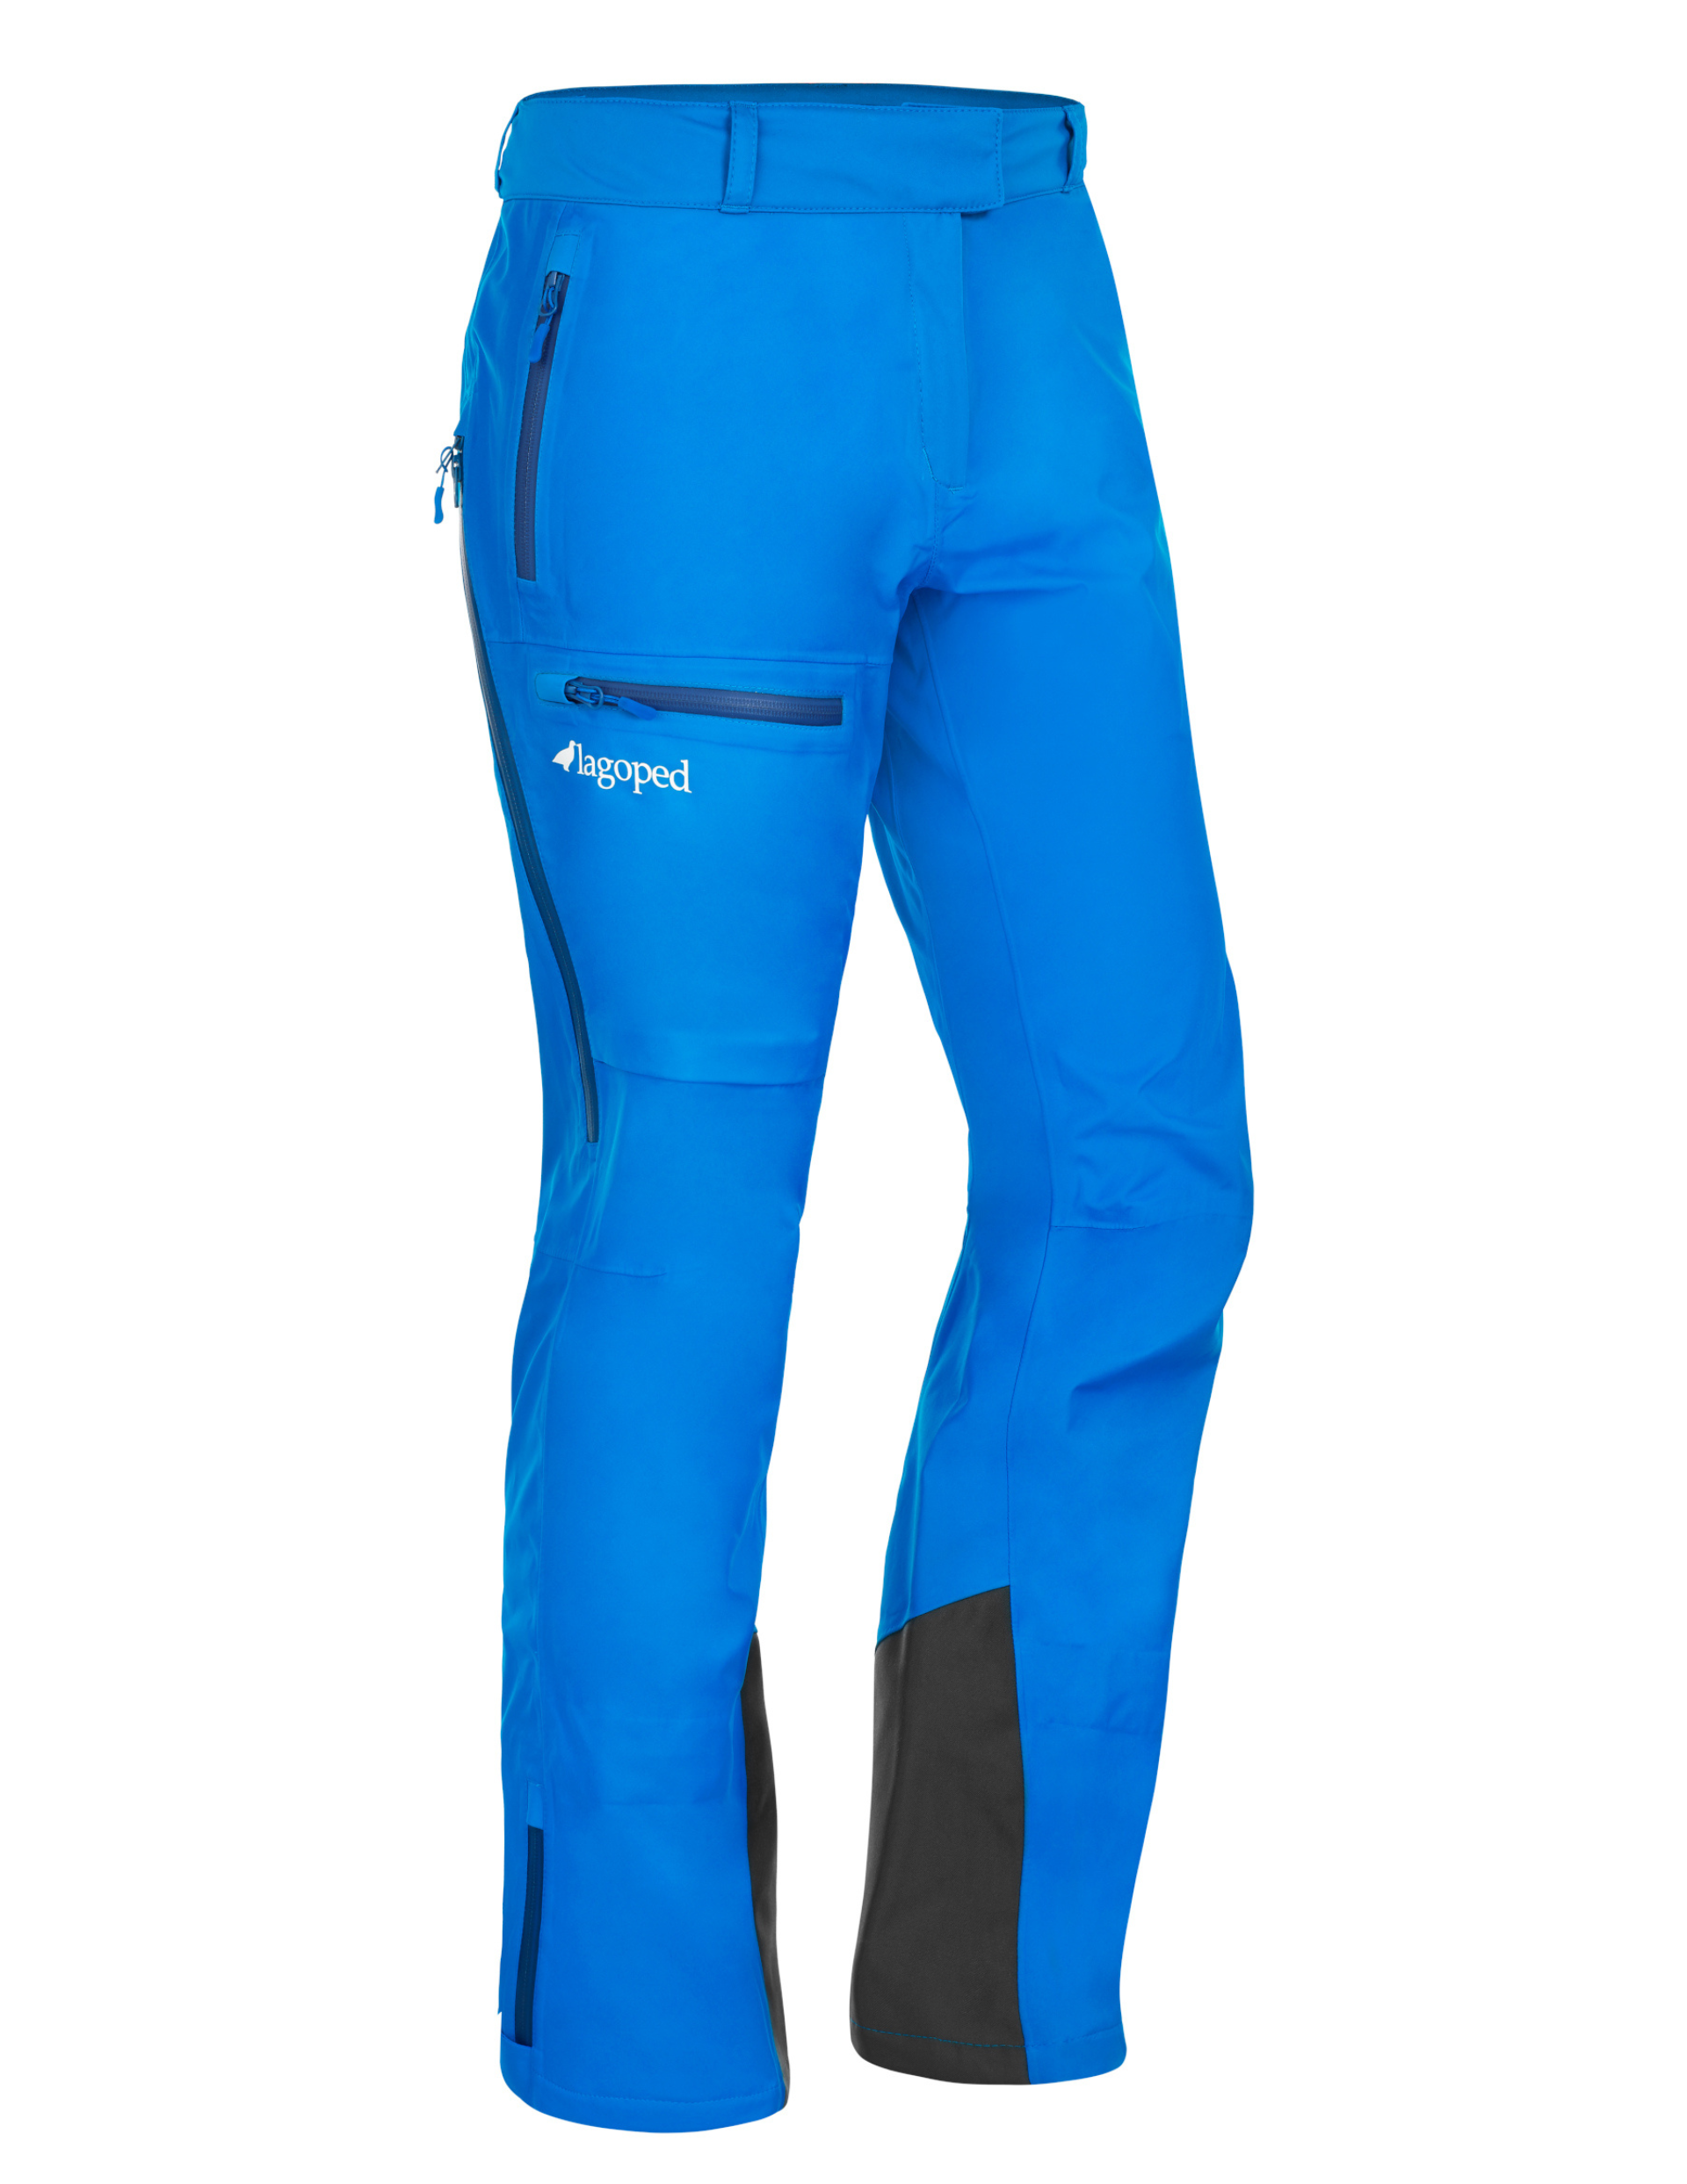 Lagoped Supa 2 Women's Ski Touring Pants